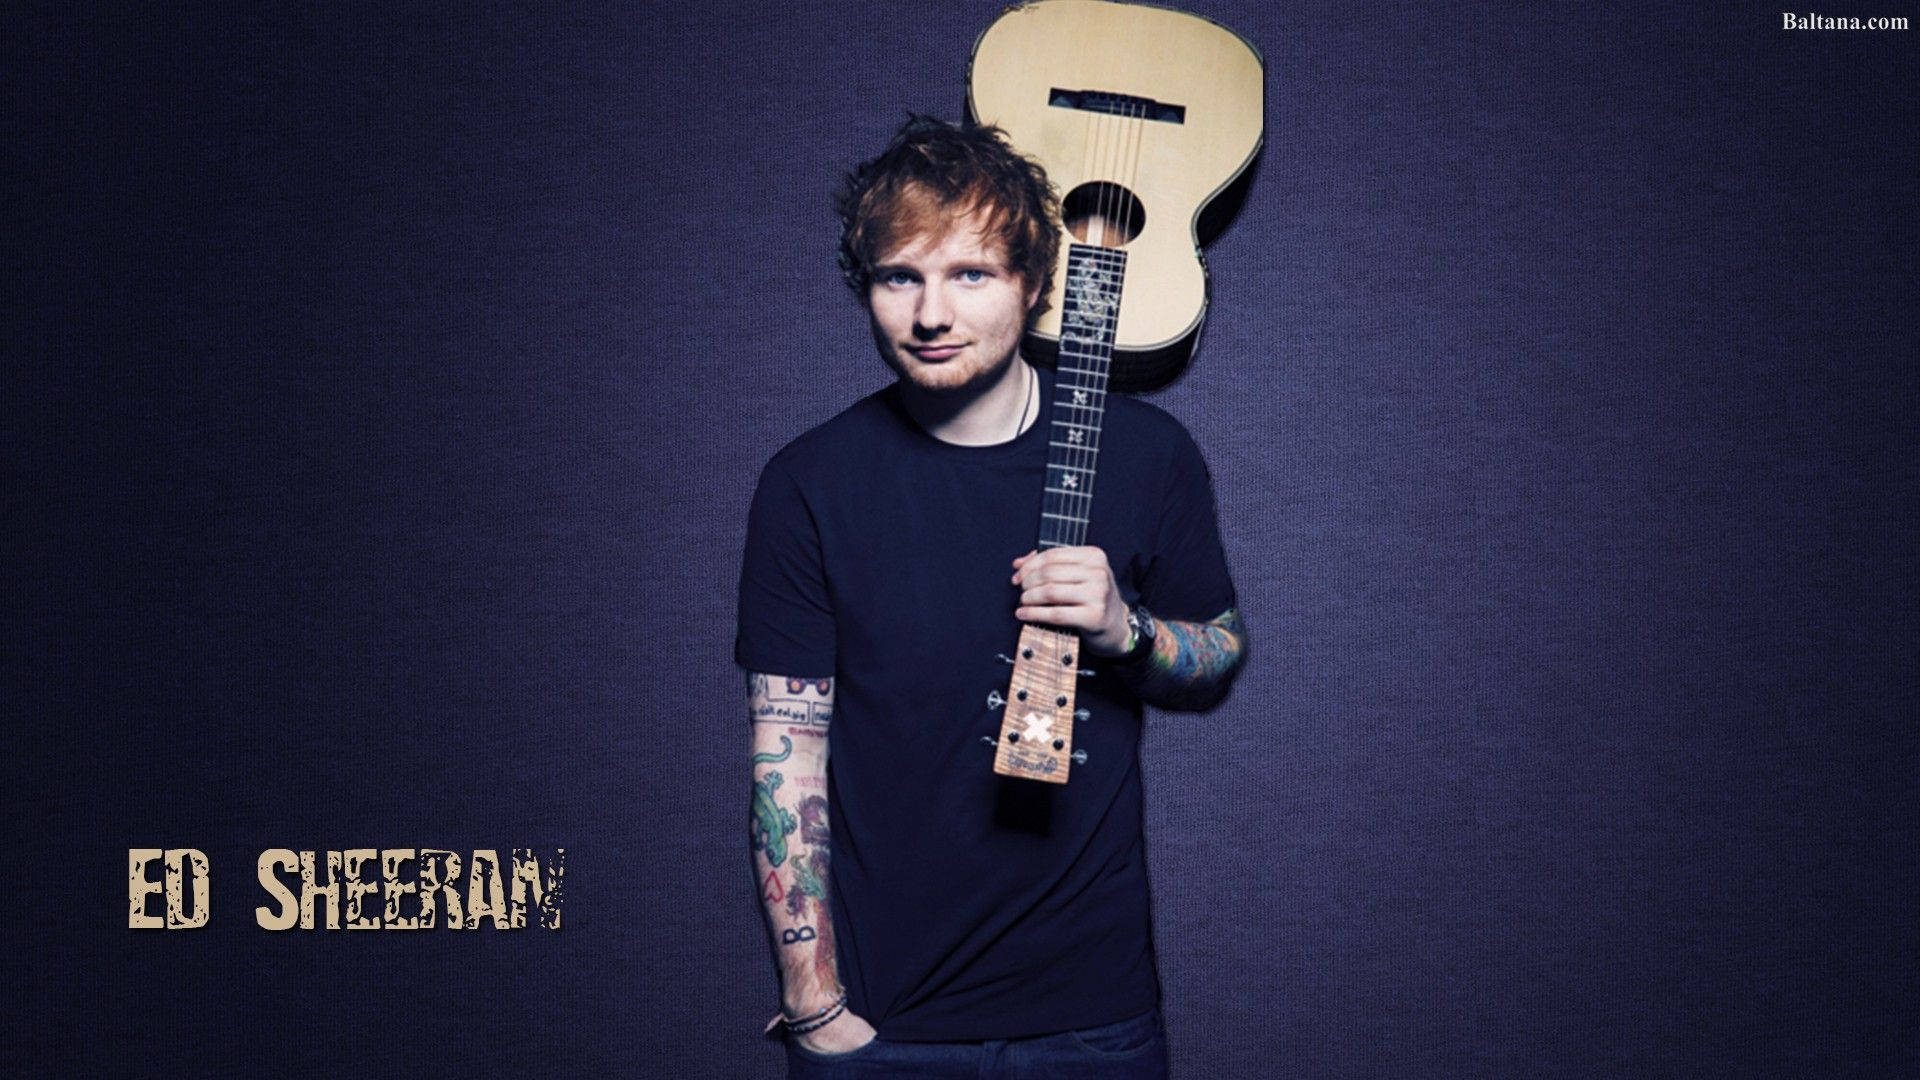 Ed Sheeran at a live show Wallpaper